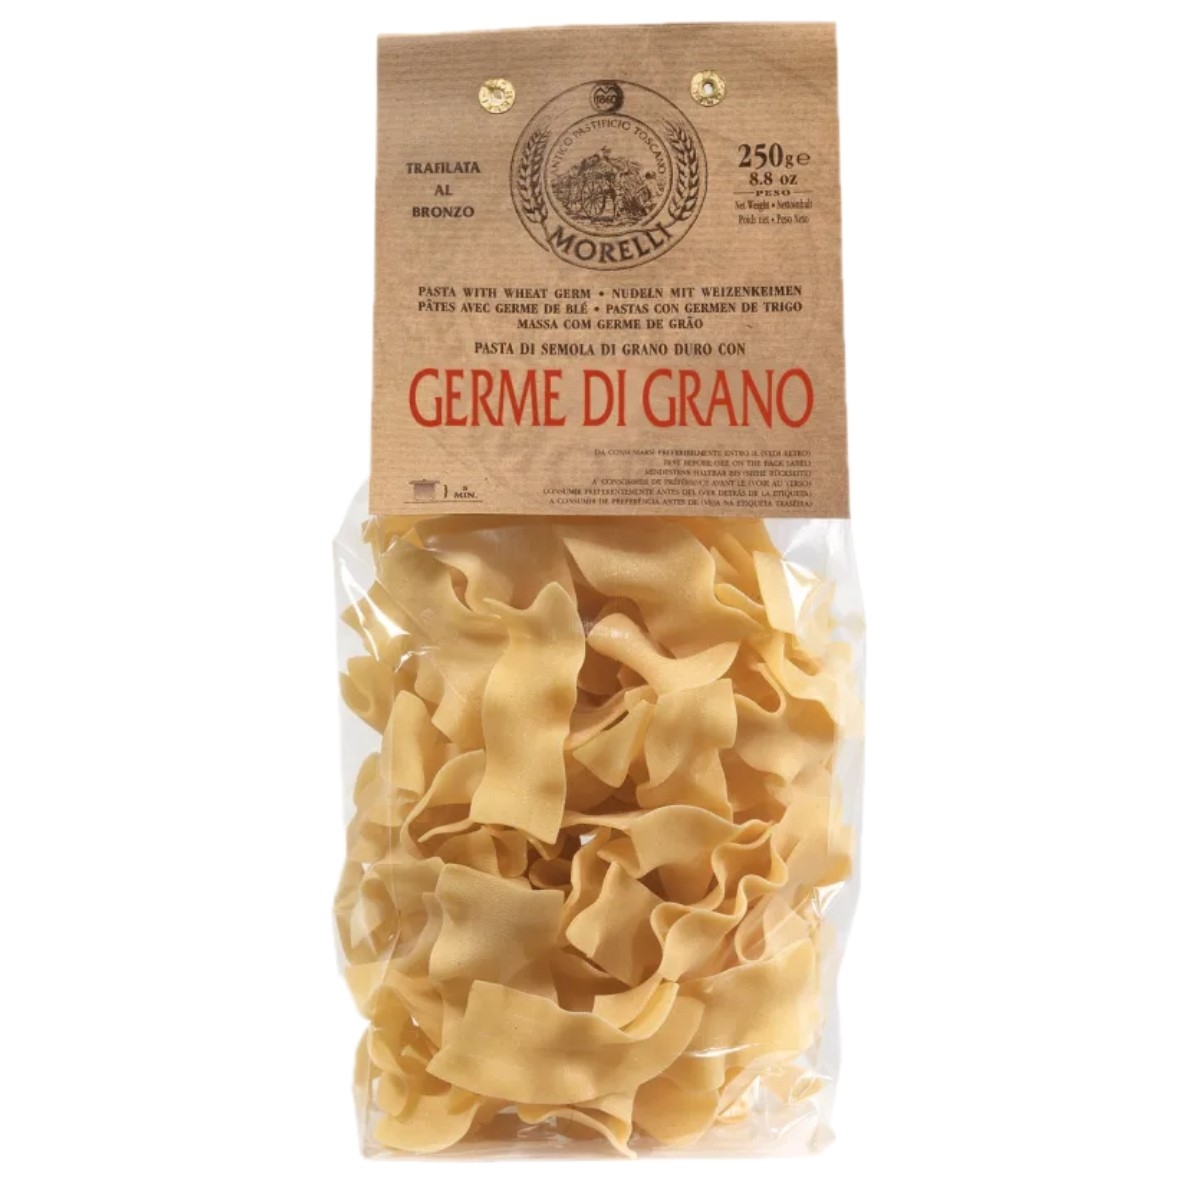 Antico pastorio morelli - pasta de germen de trigo con huevo - straccetti - 250 g